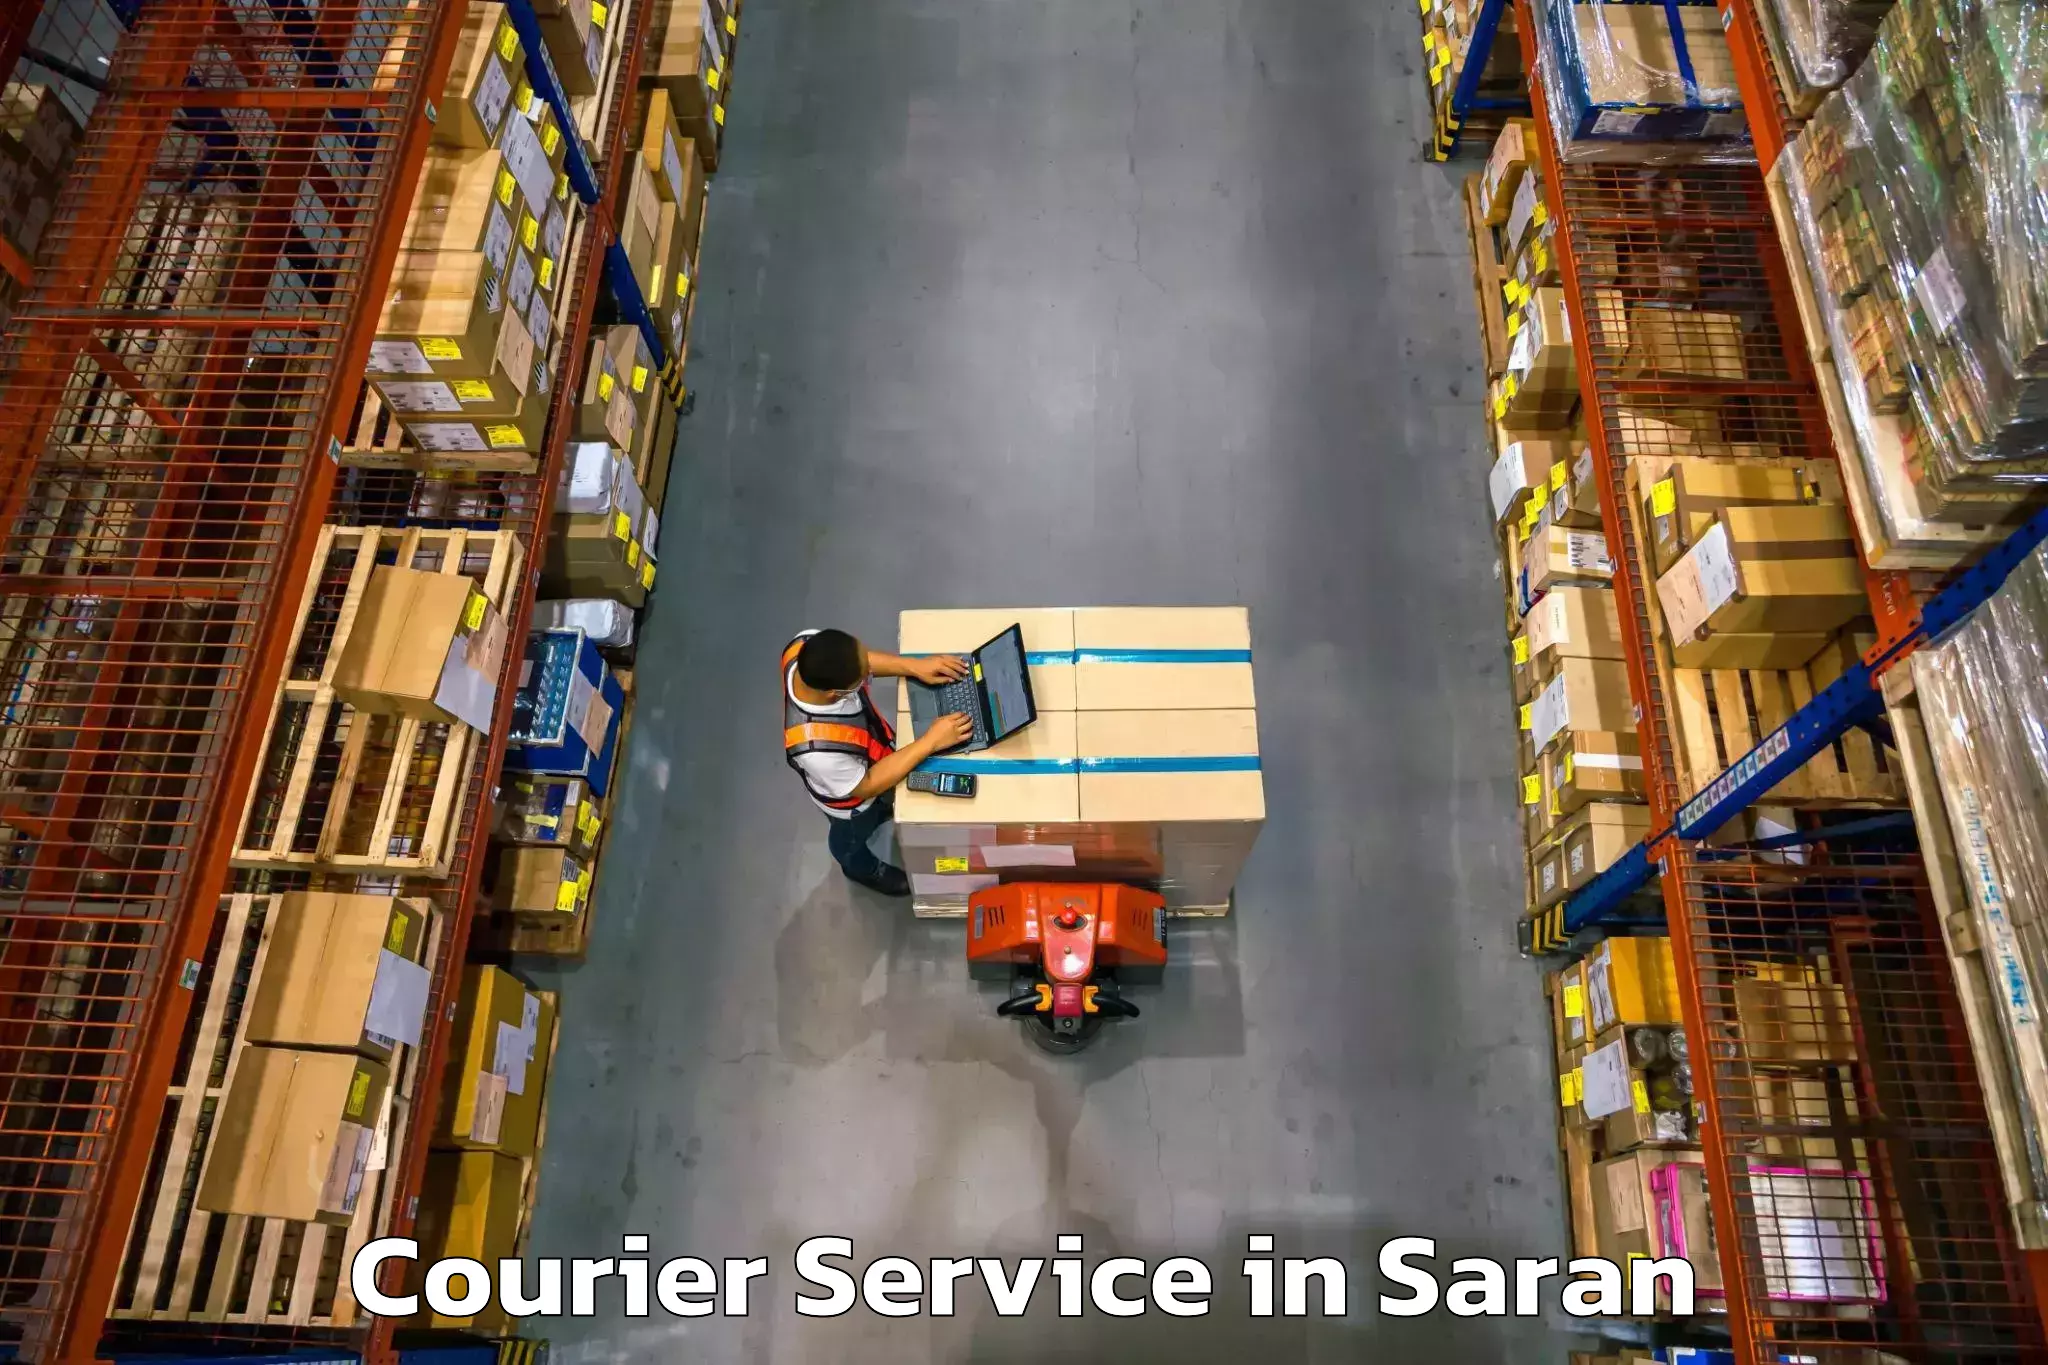 Advanced shipping network in Saran